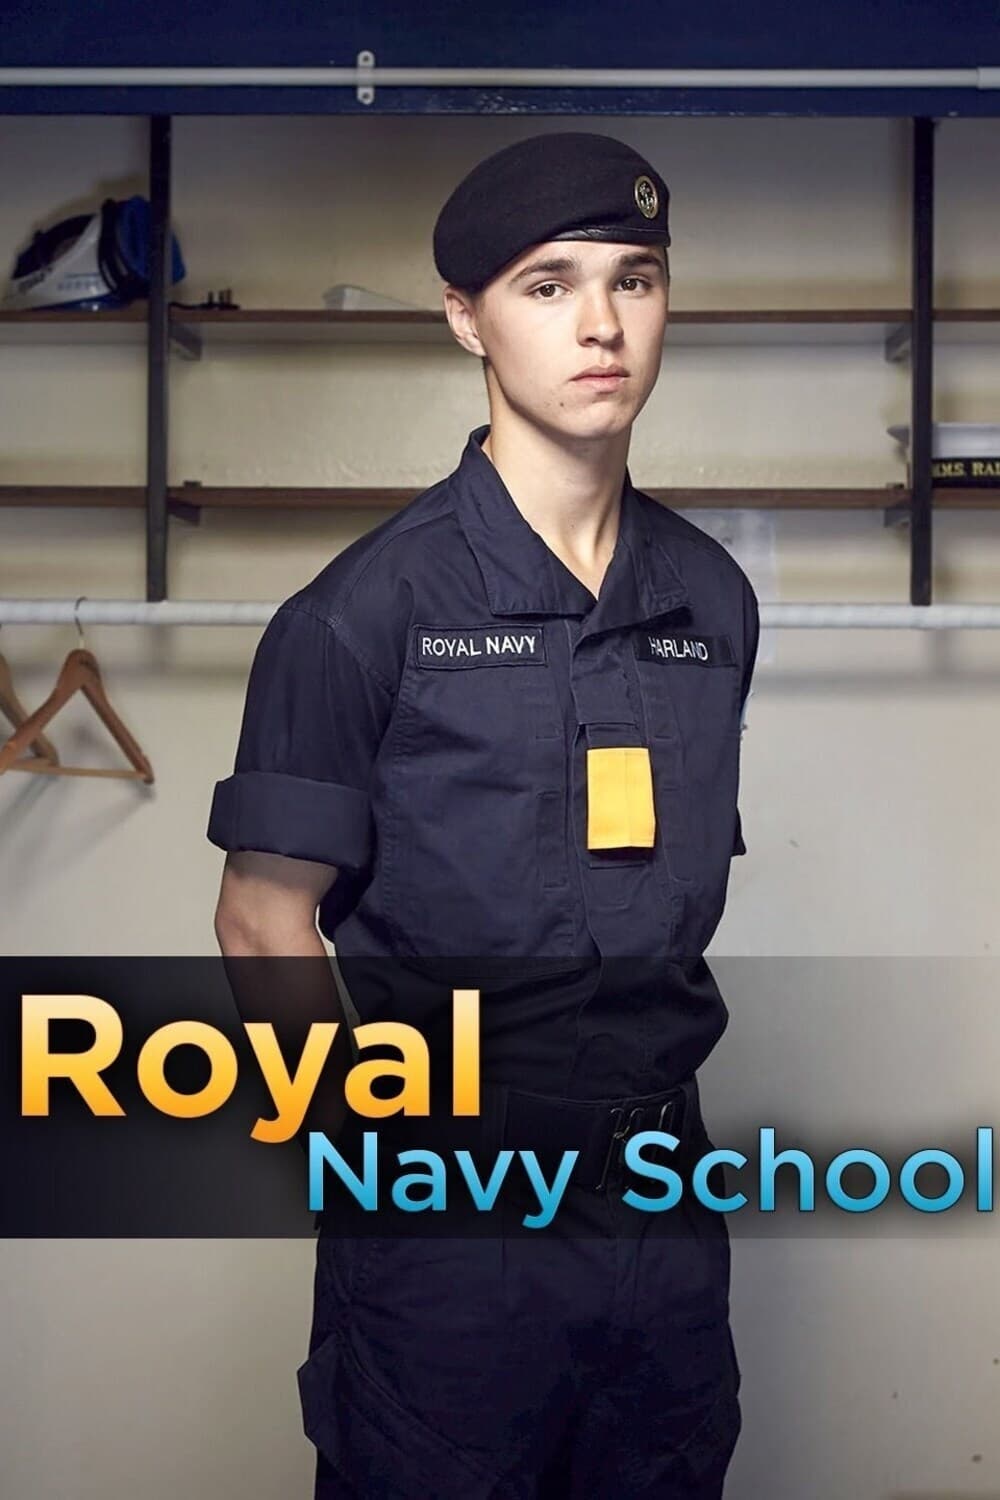 Royal Navy School